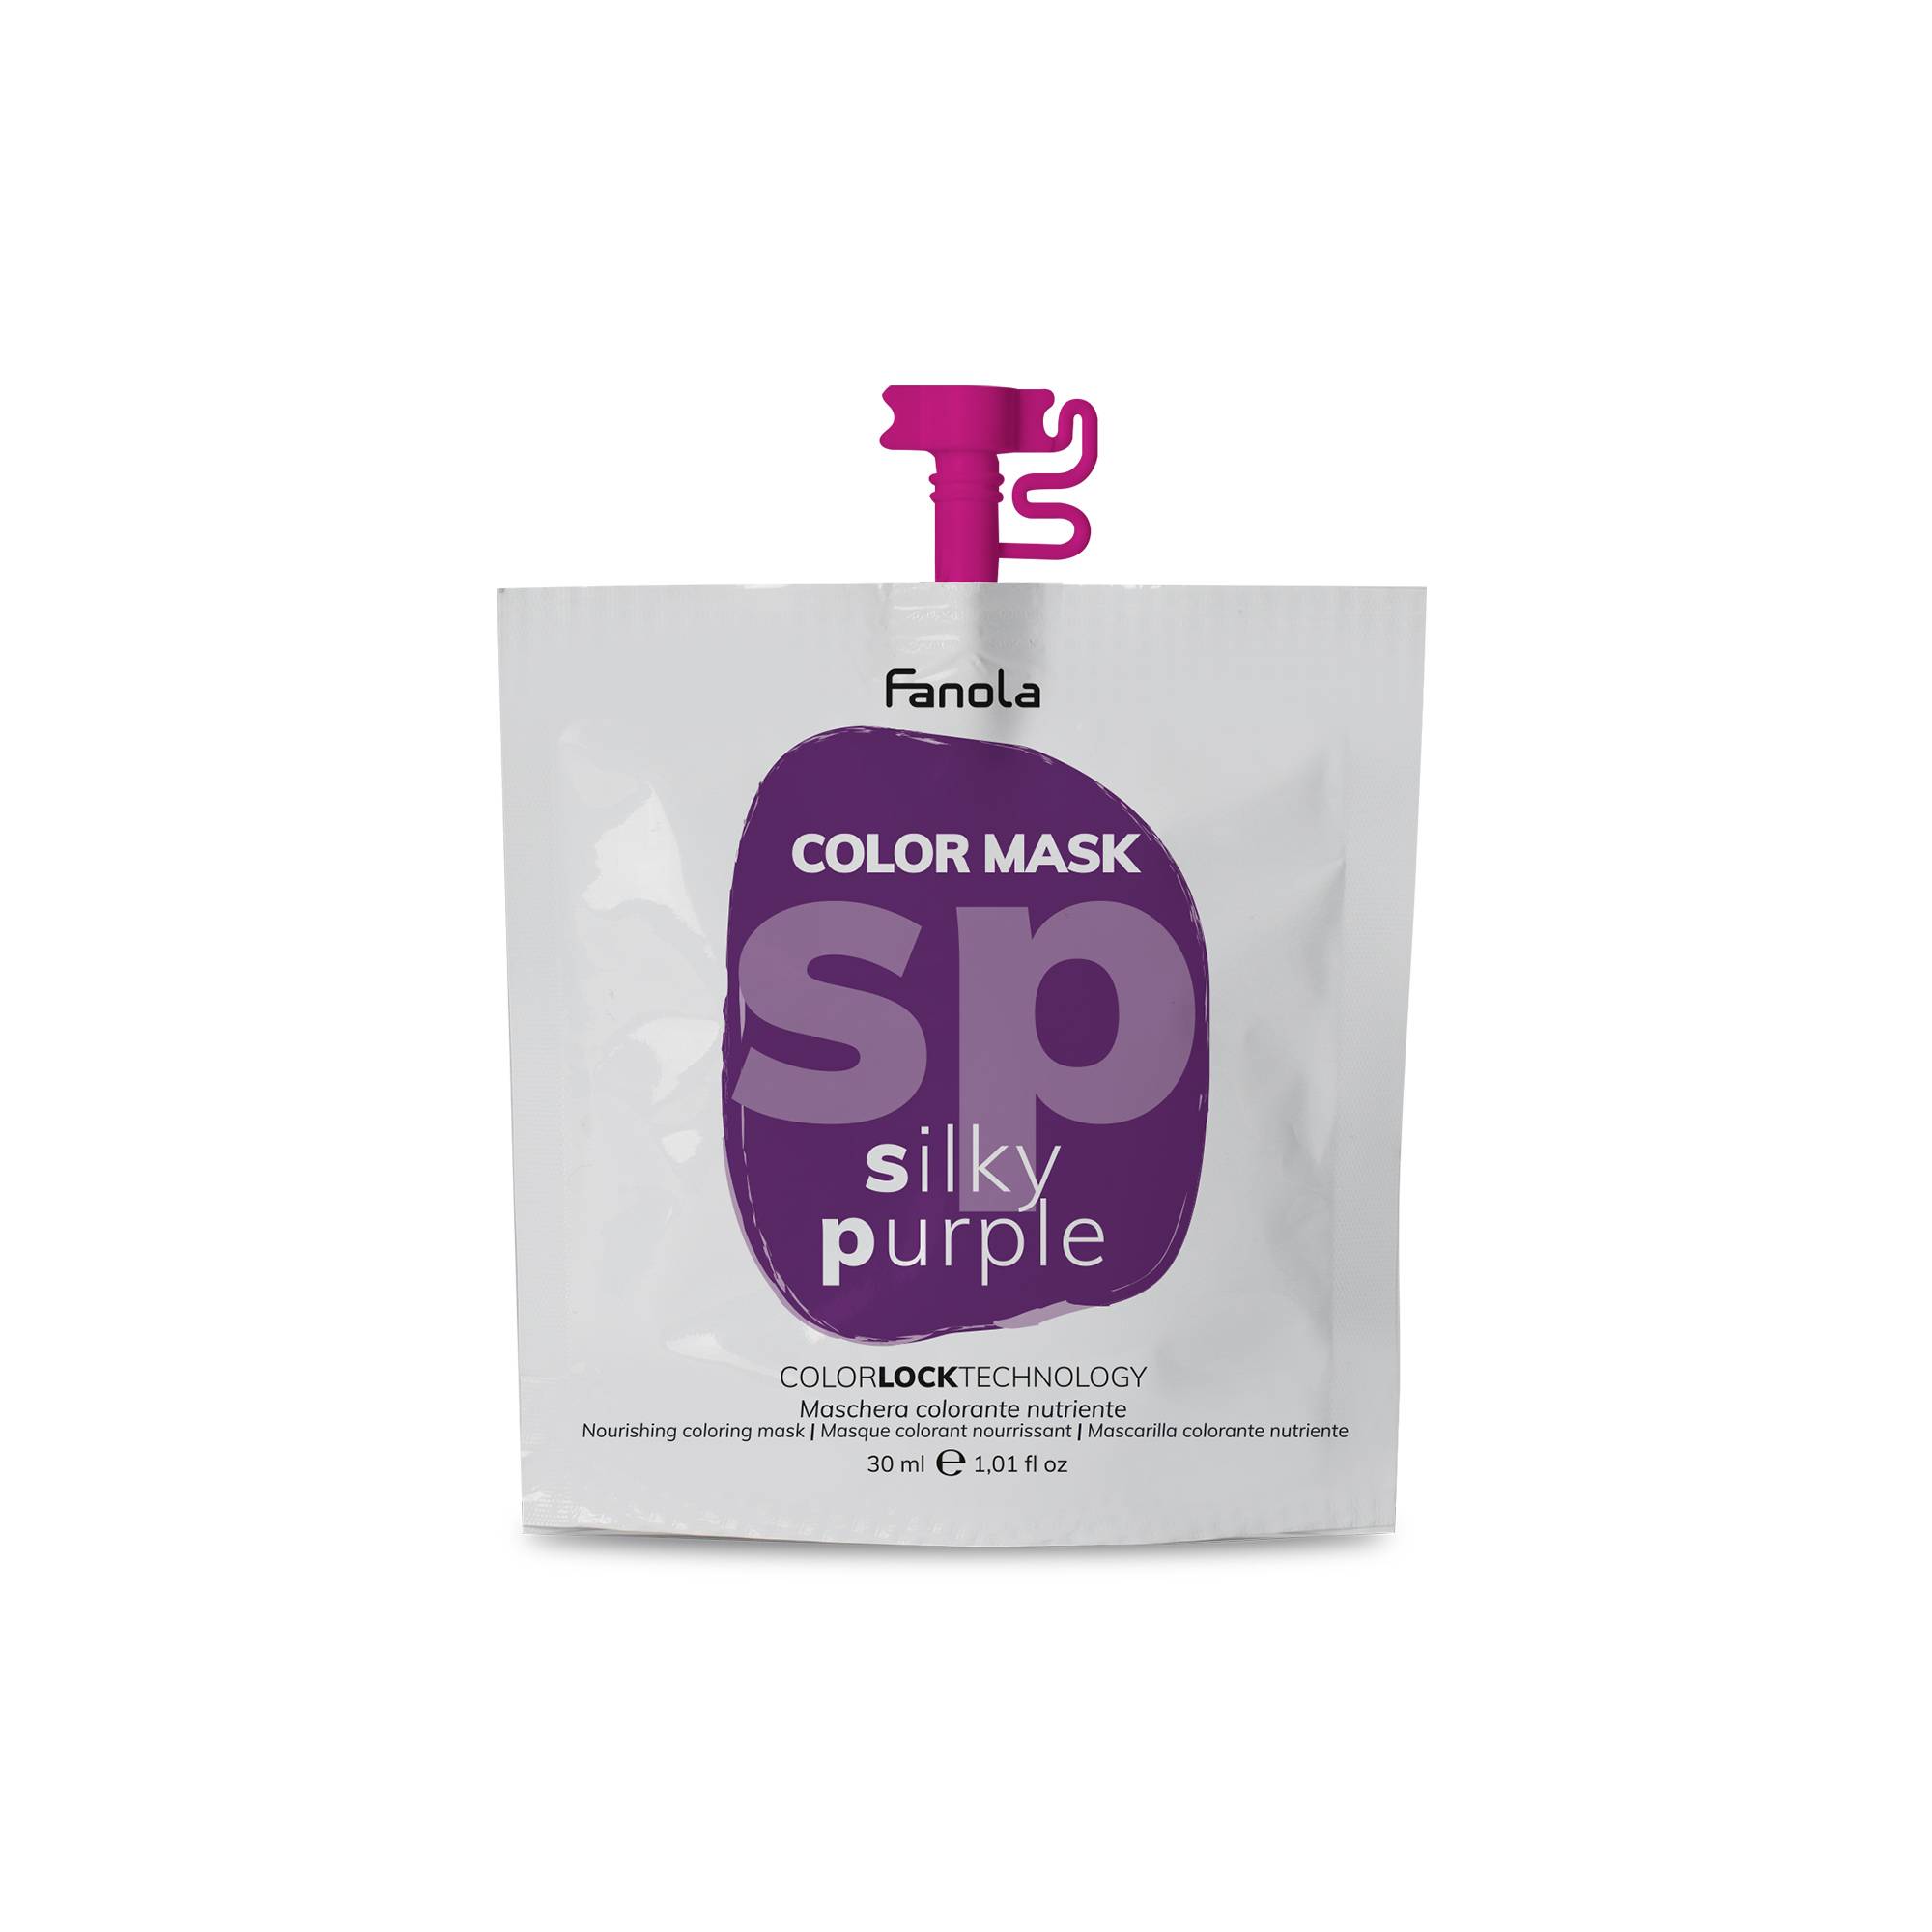 Masque colorant Color Mask silky purple de la marque Fanola Contenance 30ml - 1